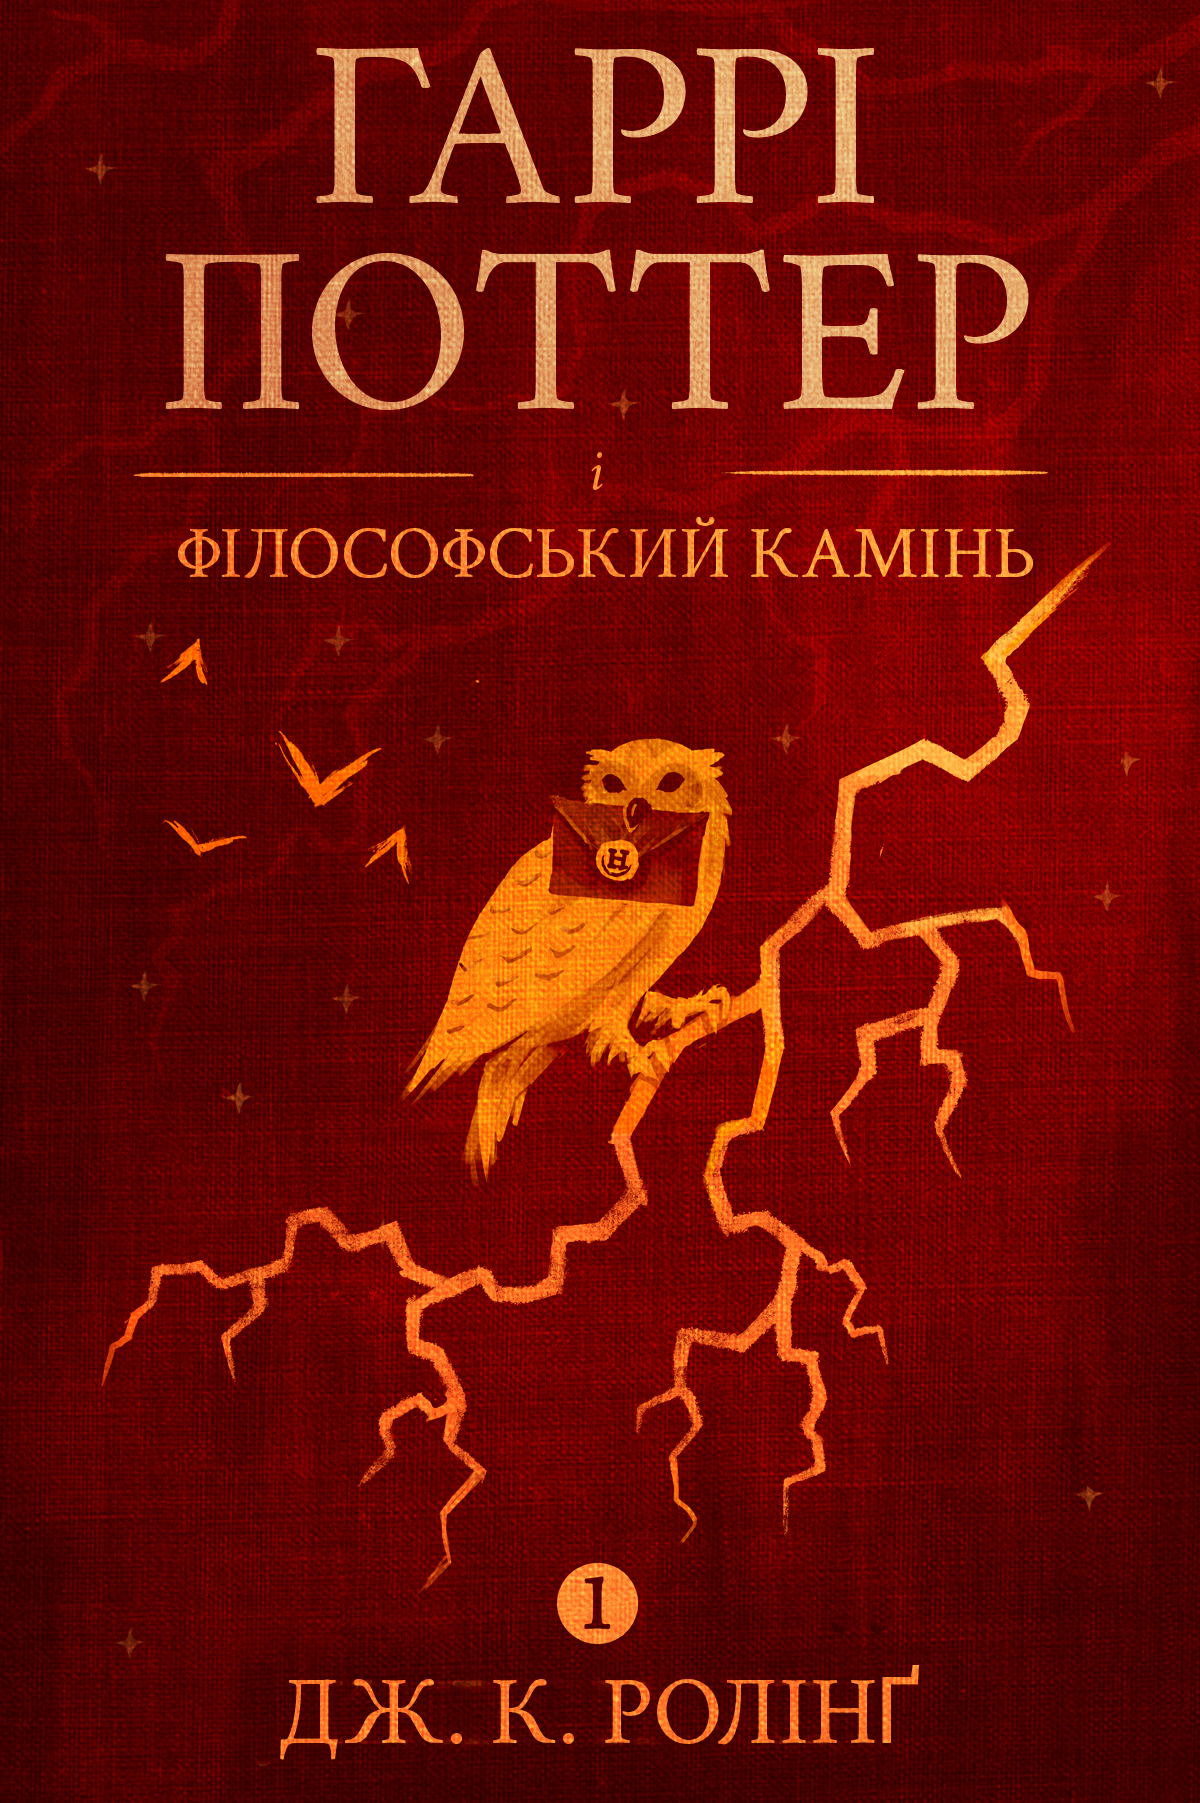 Ukraine Book 1 2